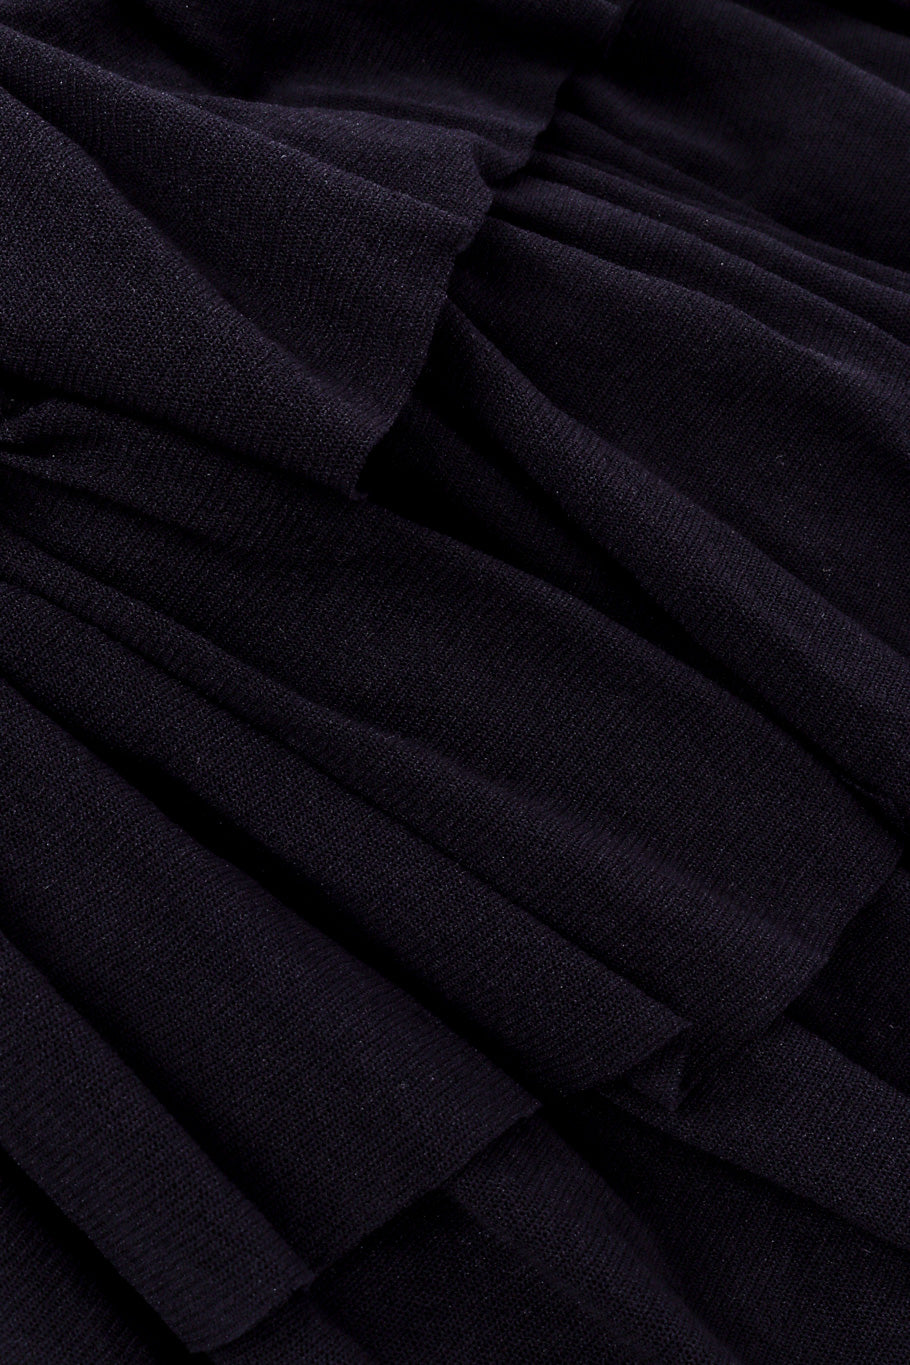 Jean Paul Gaultier Tiered Ruffle Mesh Cardigan fabric closeup @recessla